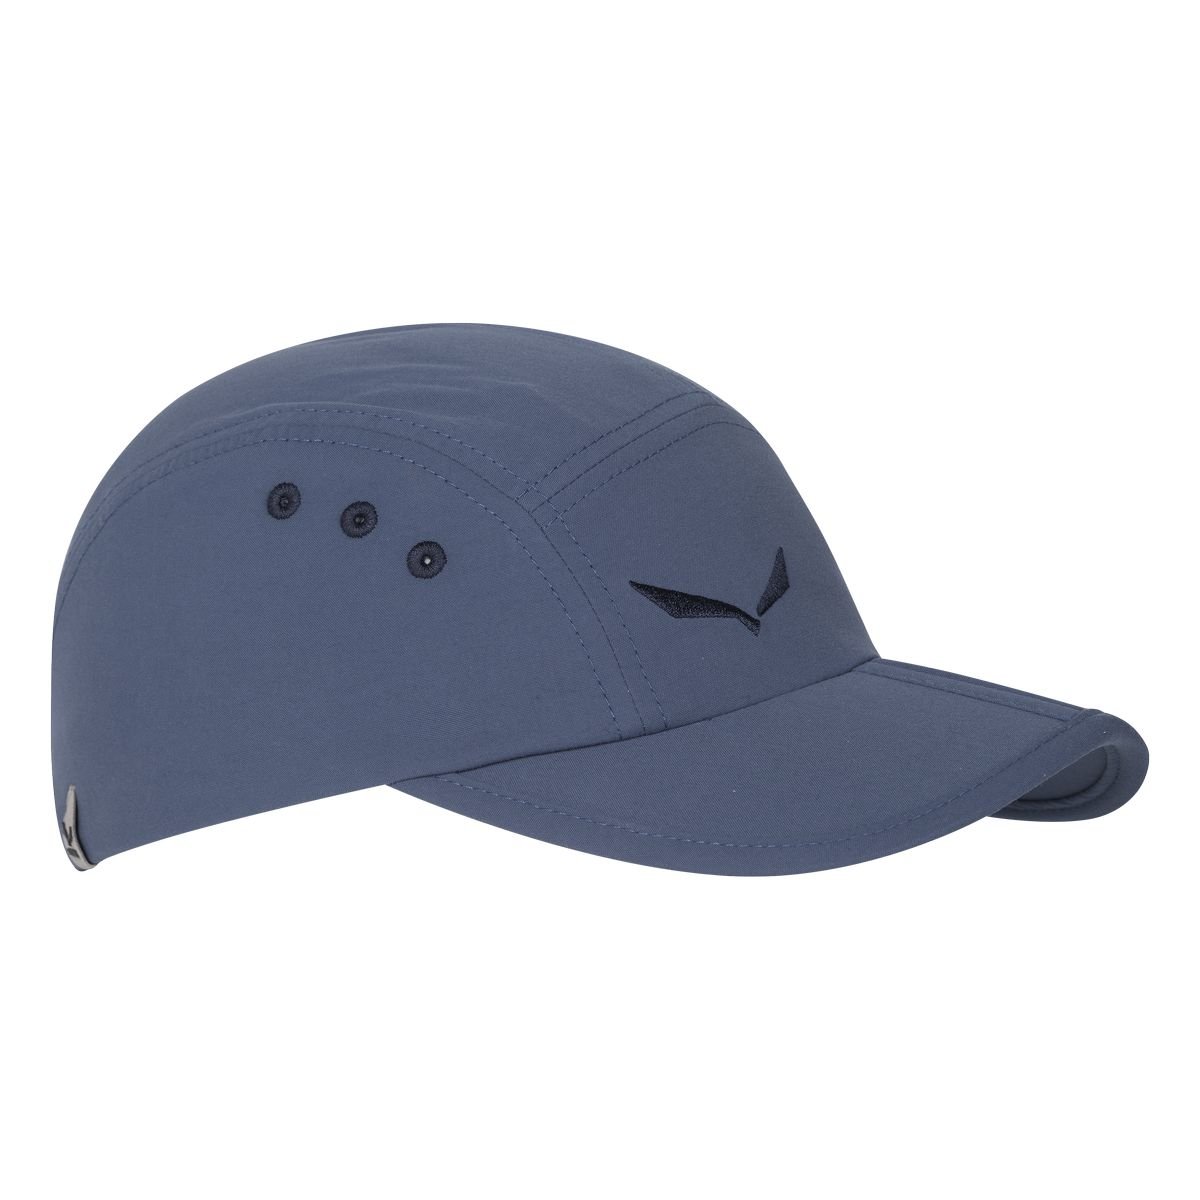 Велобейсболка Salewa 2016 FANES (SUN PRO) FOLD VISOR CAP, dark denim, синяя, размер:M/58, 24748_8670